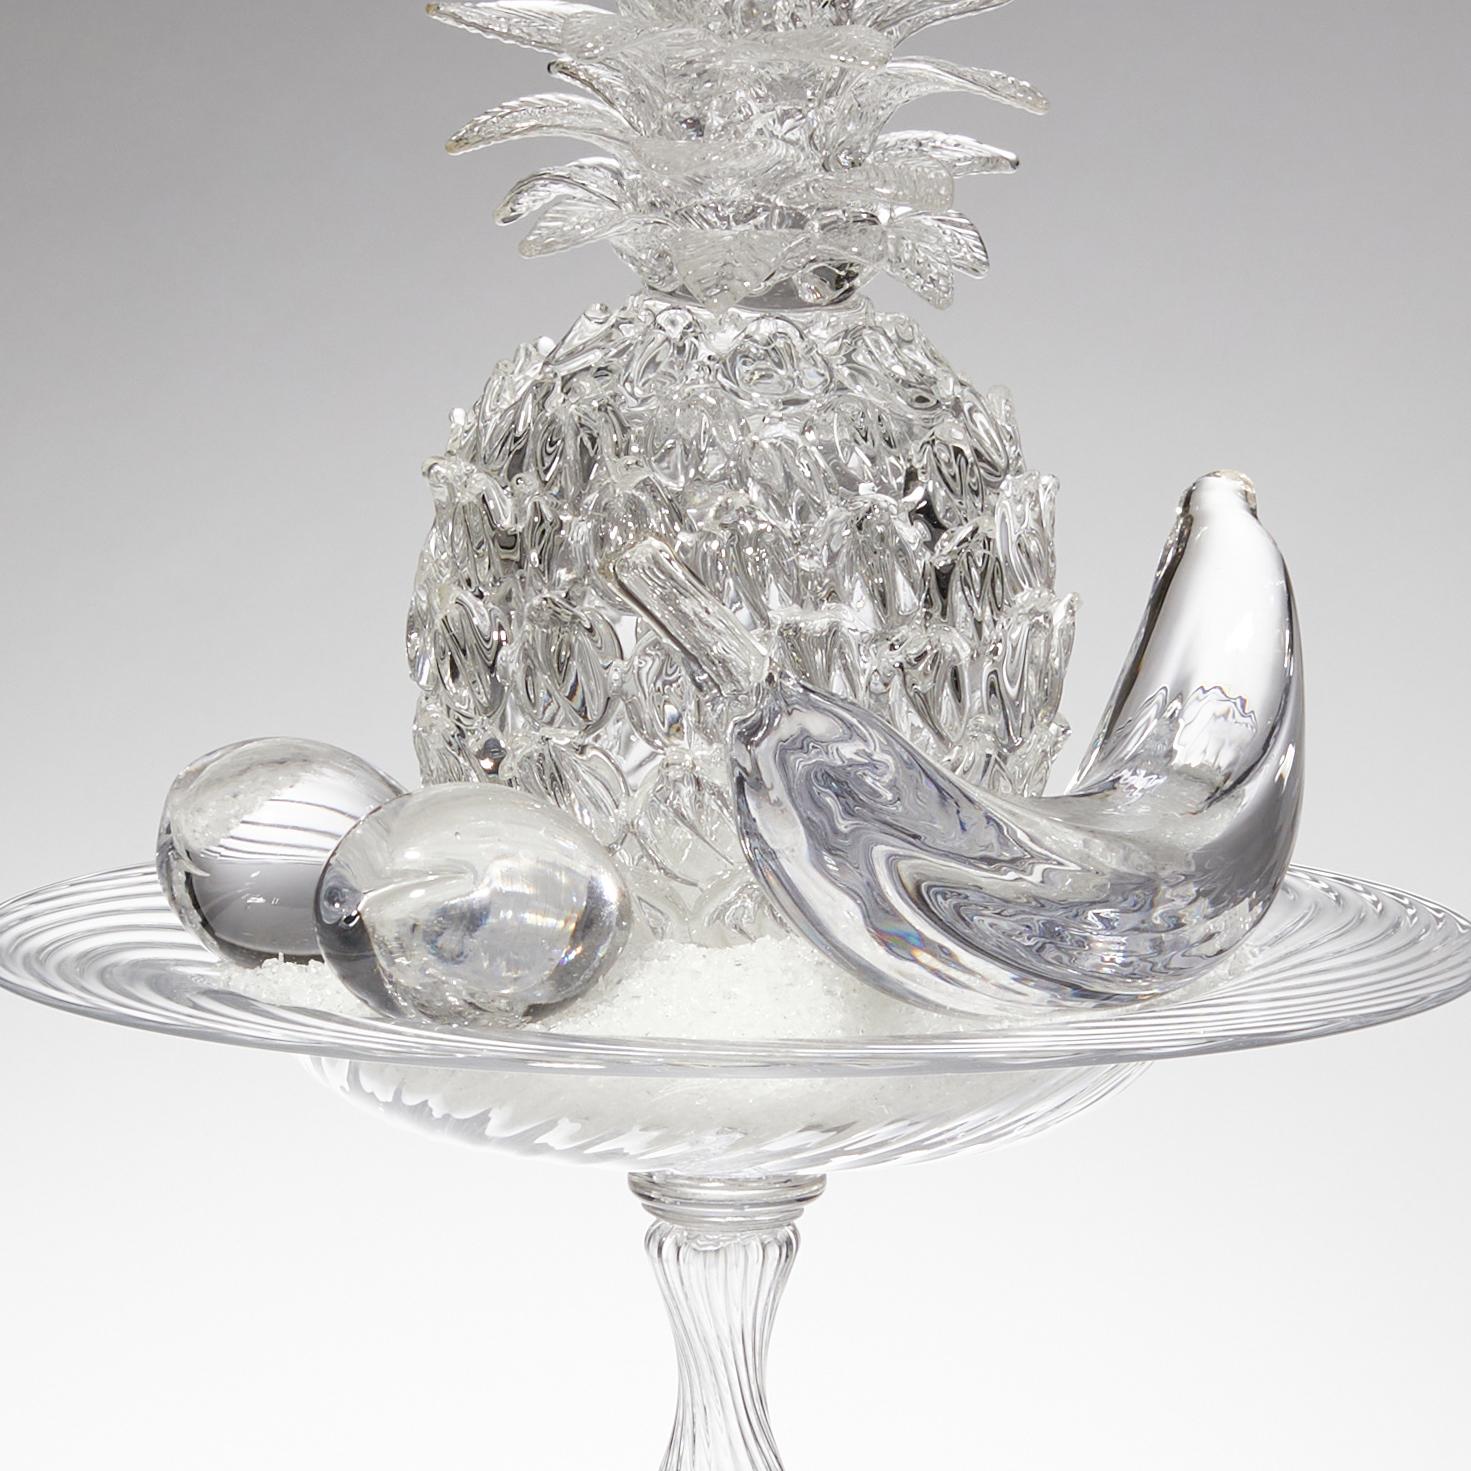 British AnanasMusaPrunus, a Glass Still Life Installation Art Work by Elliot Walker For Sale